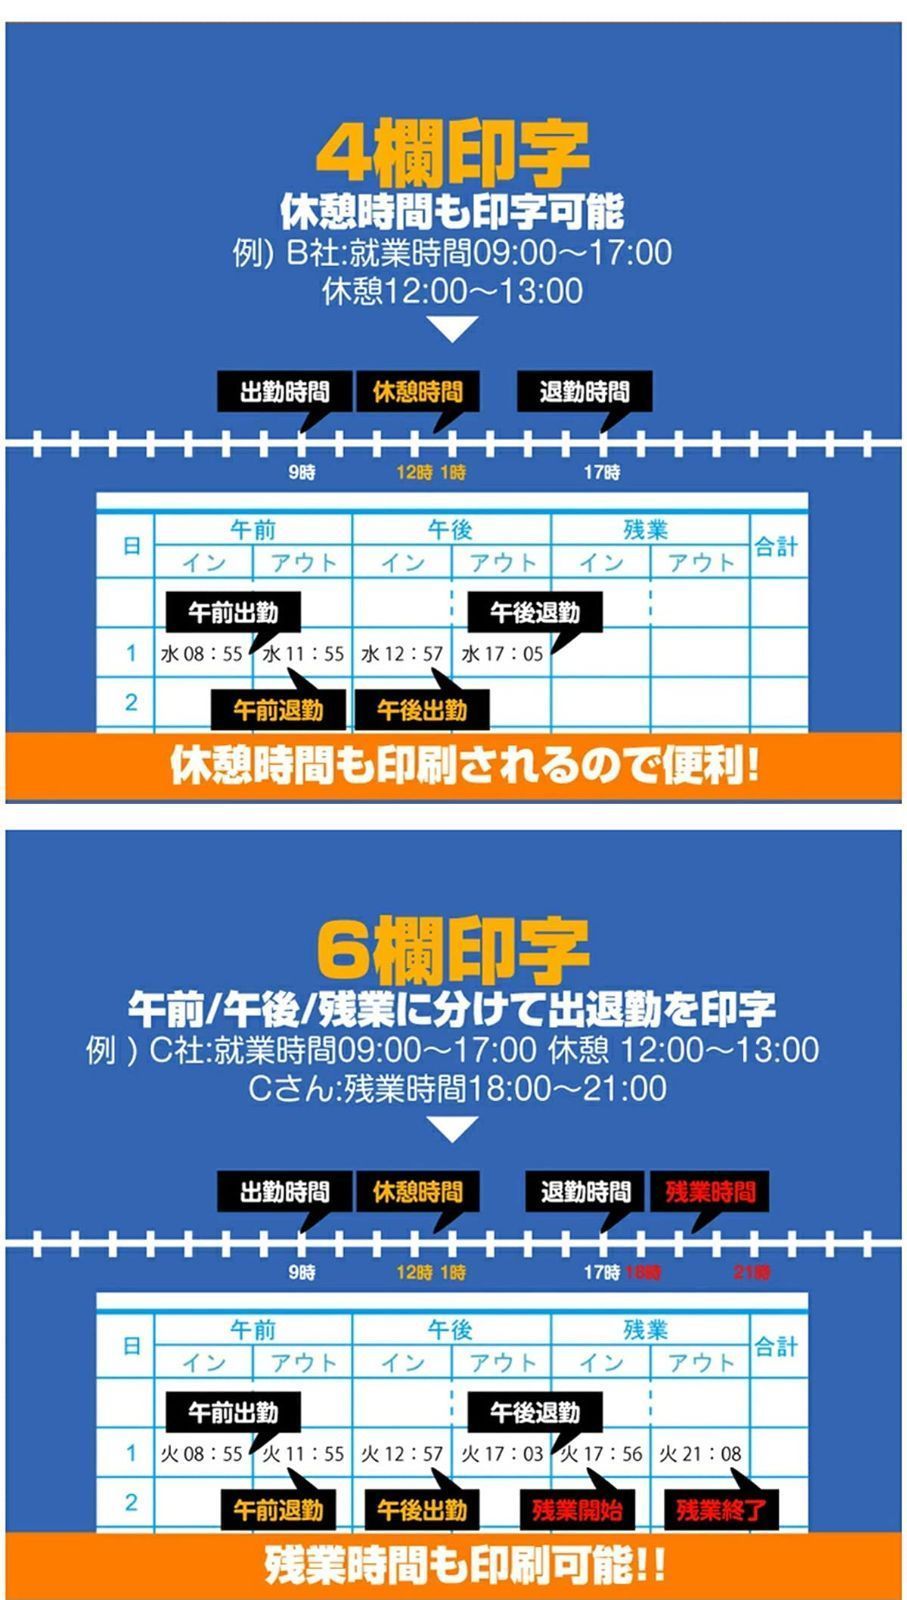 TOKAIZ タイムレコーダー 本体 6欄印字可能 両面印字モデル タイムカード５０枚付き TR-001s - 3